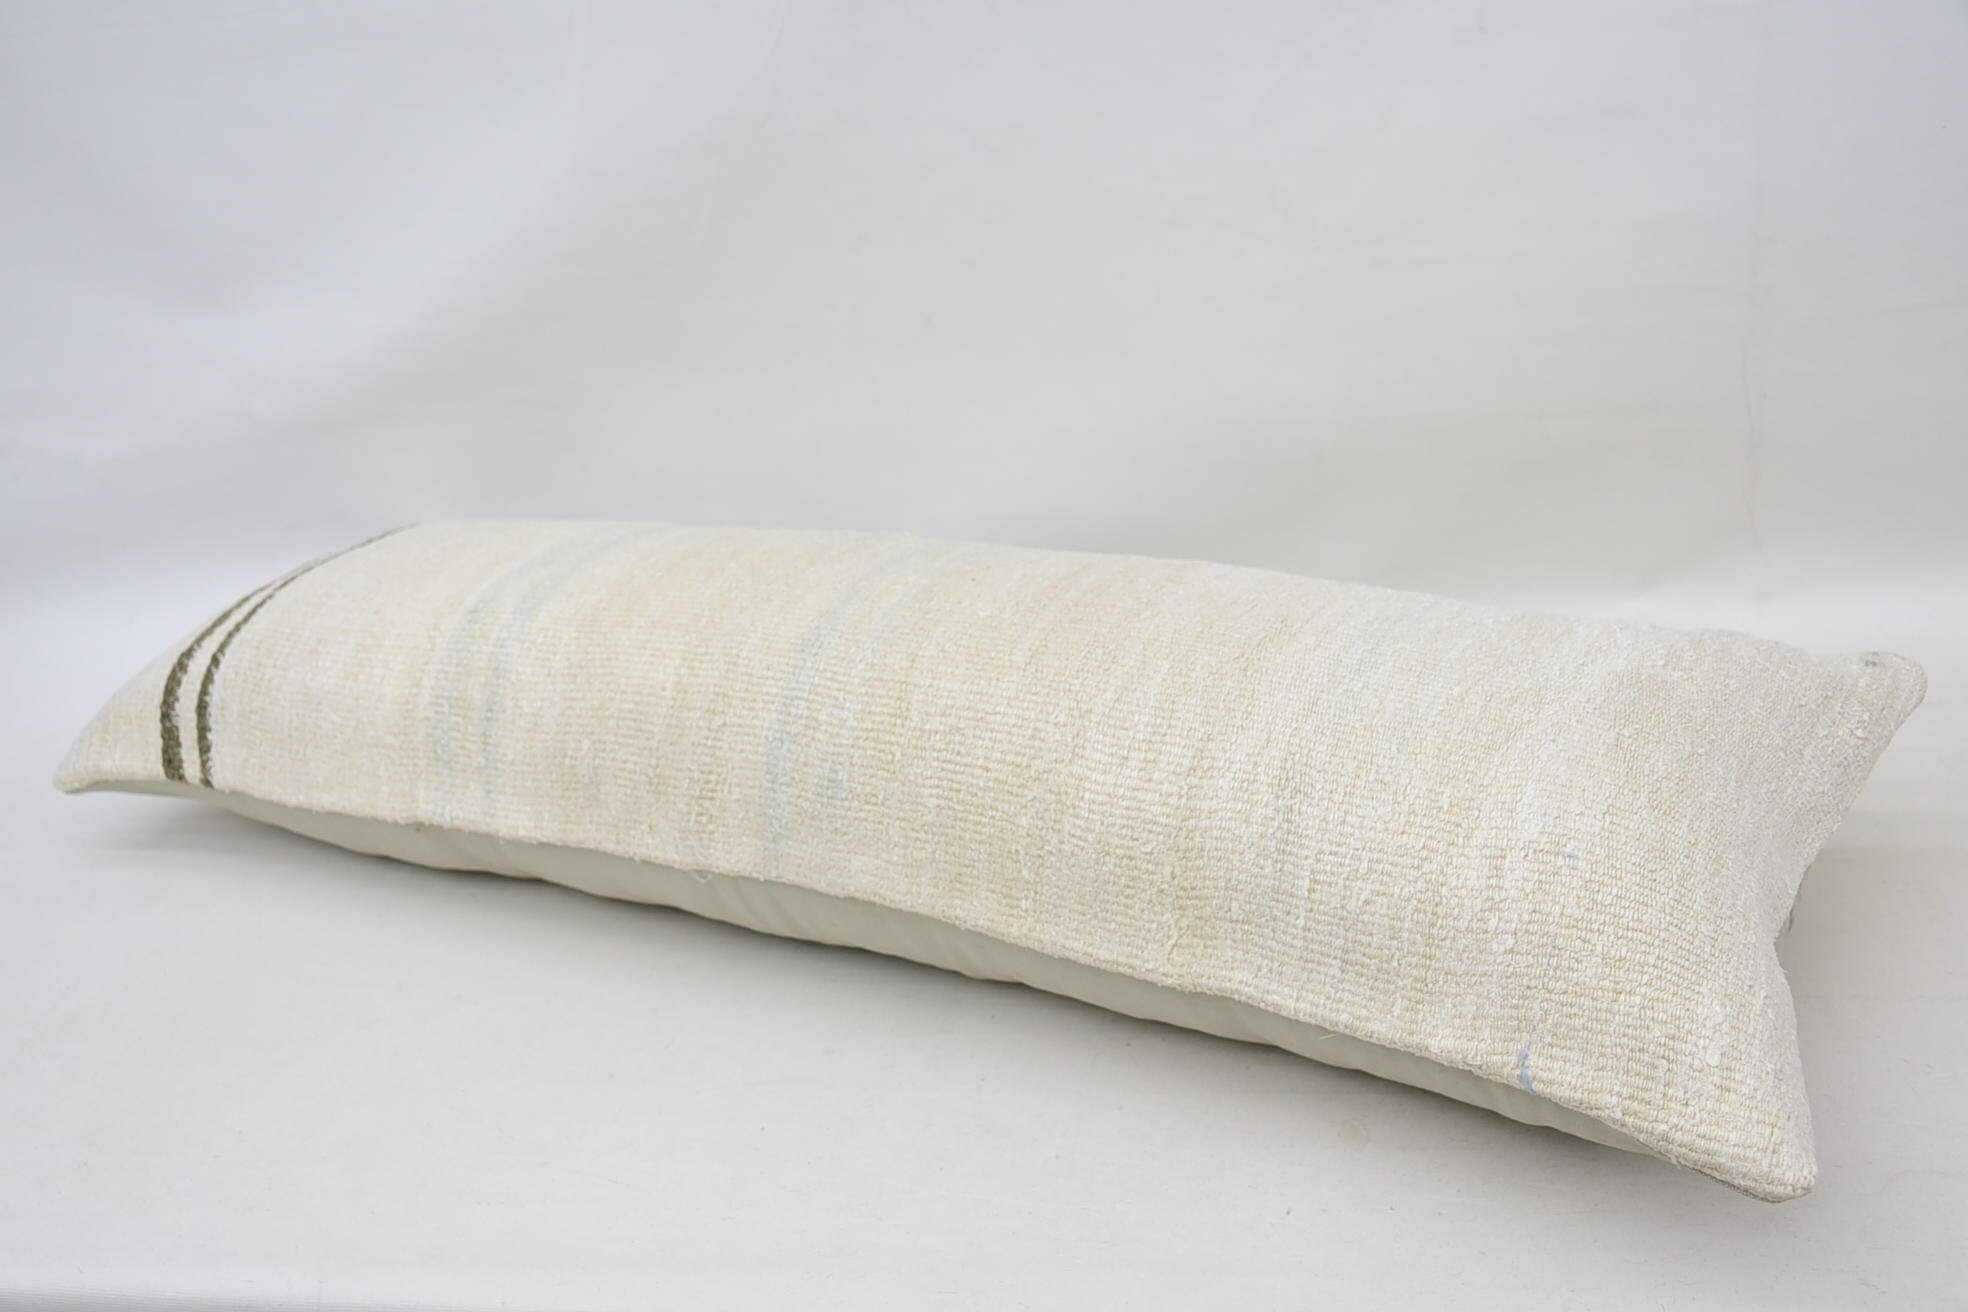 Vintage Pillow, 16"x48" White Pillow Sham, Nomadic Cushion, Handwoven Pillow, Kilim Pillow, Muted Cushion Case, Interior Designer Pillow